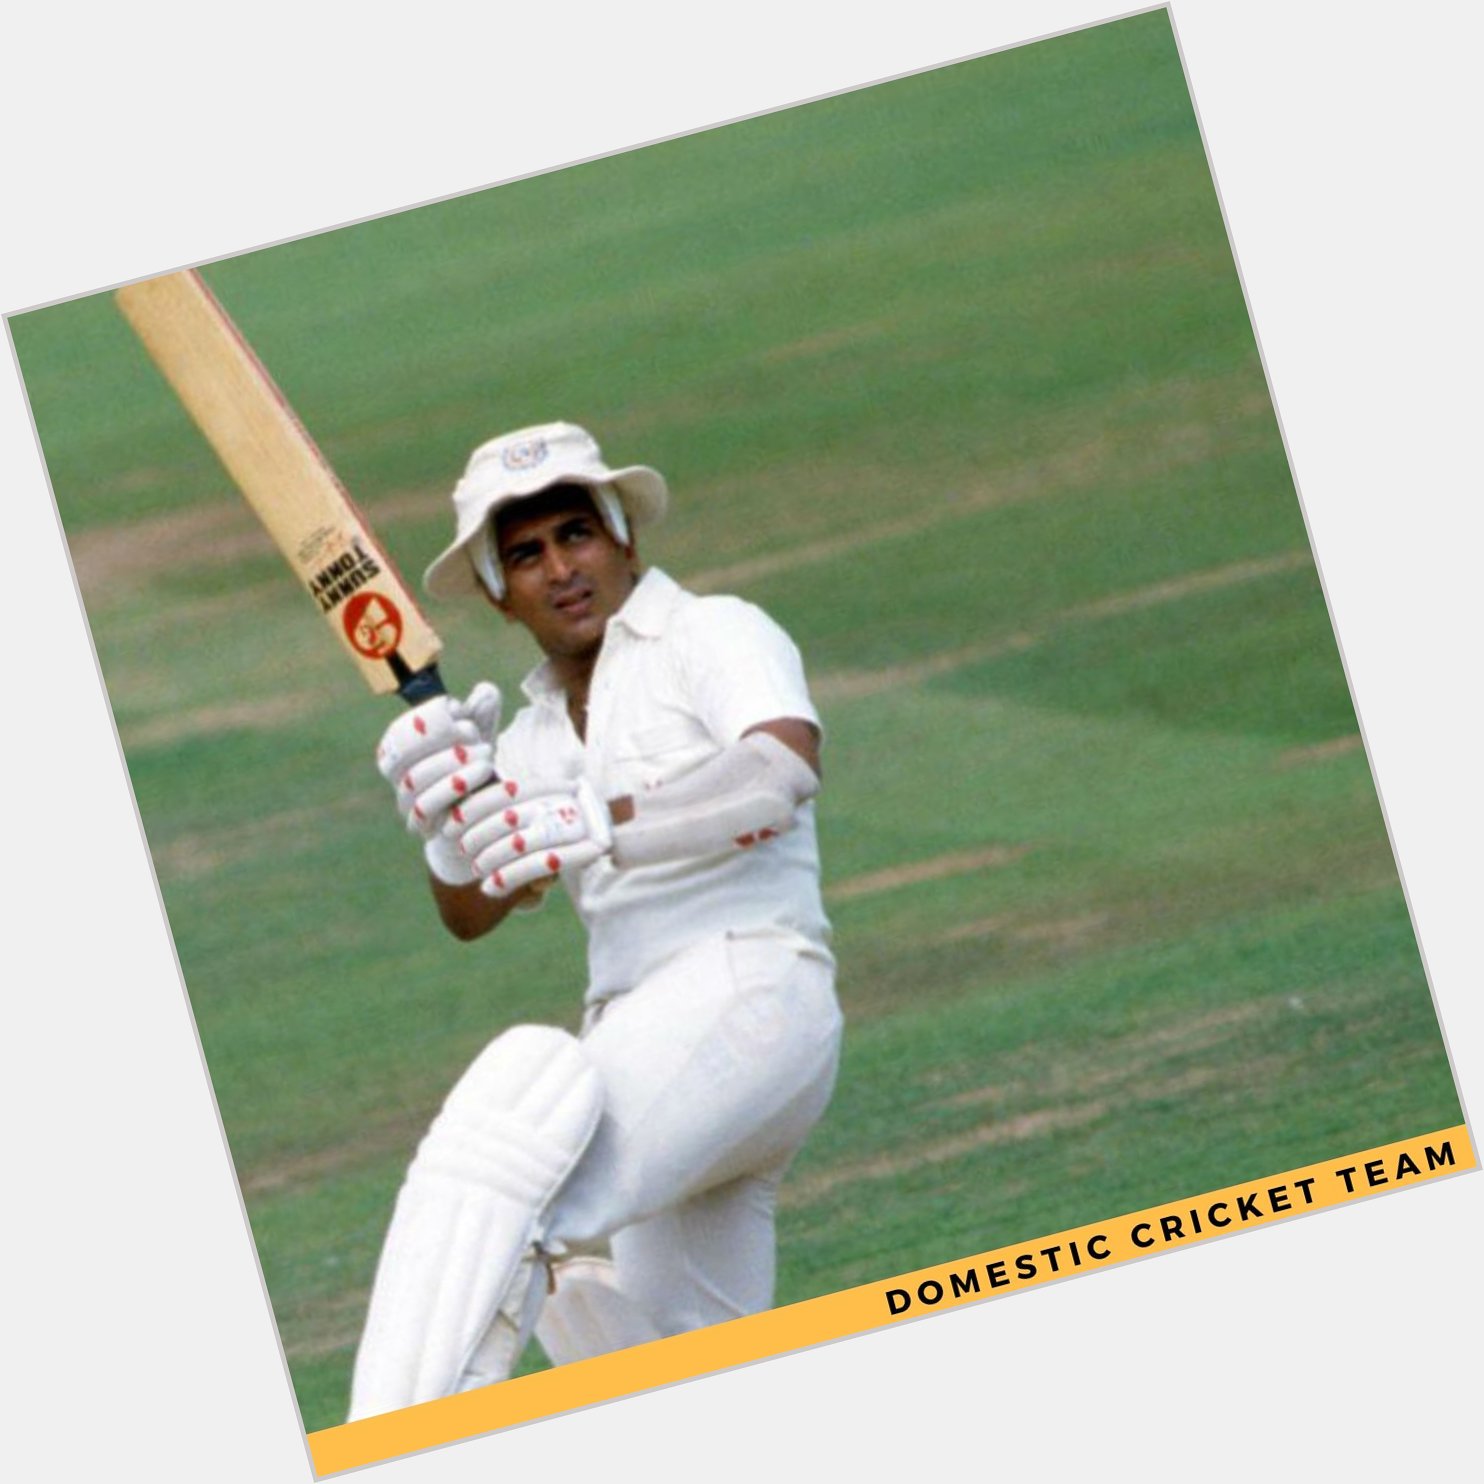 Happy Birthday to the former captain and batting legend, Sunil Gavaskar! 